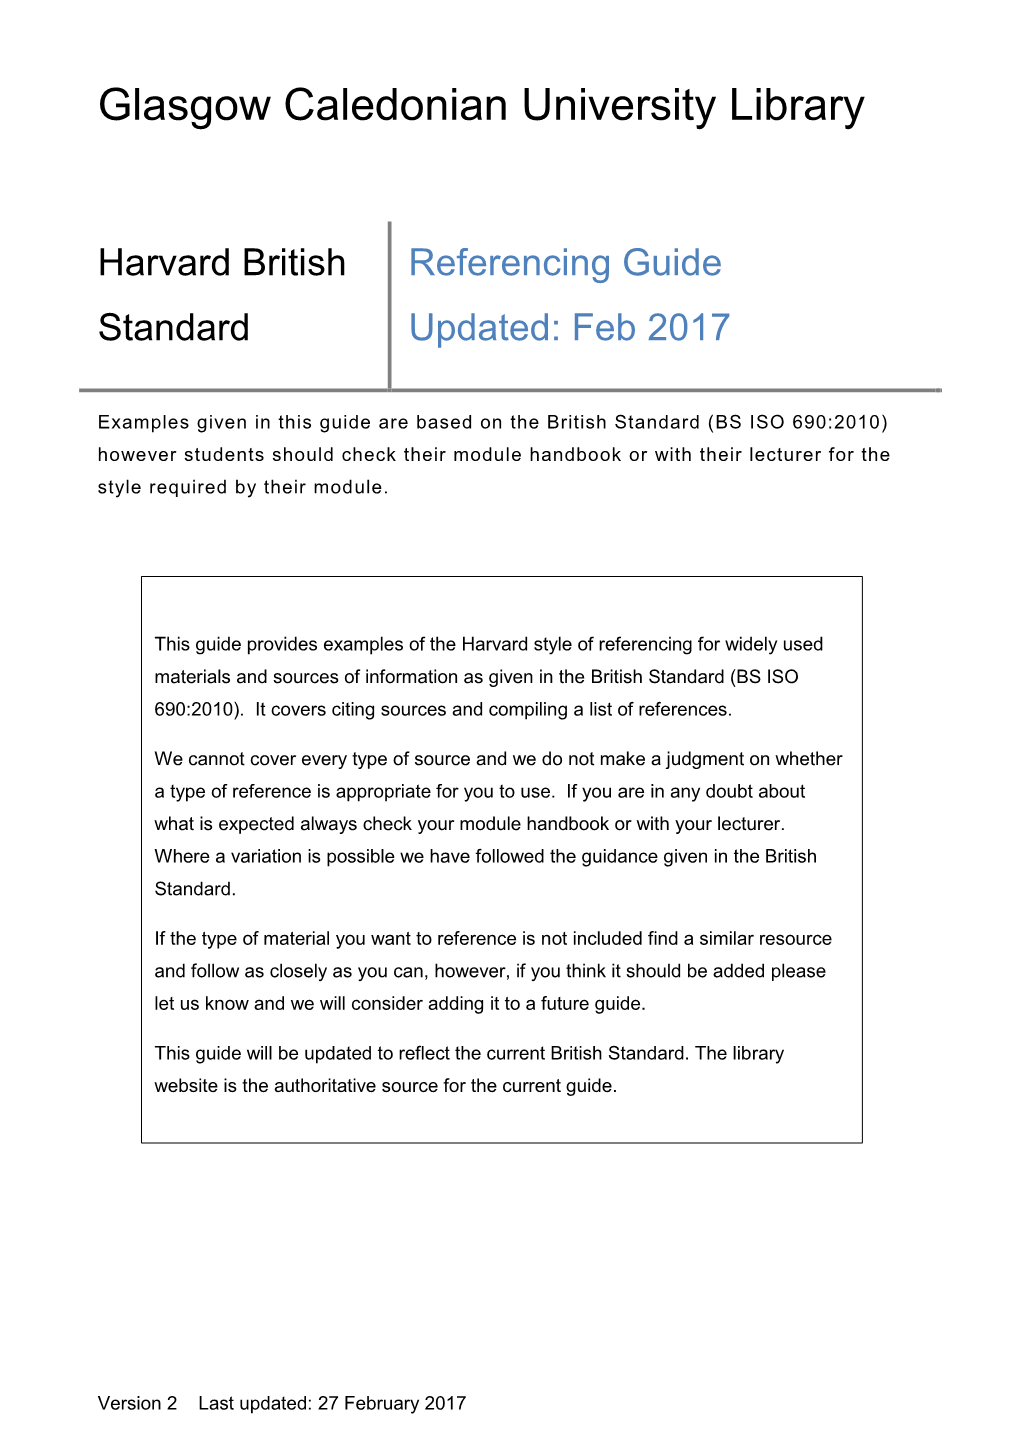 Harvard British Standard 2010 GCU Library